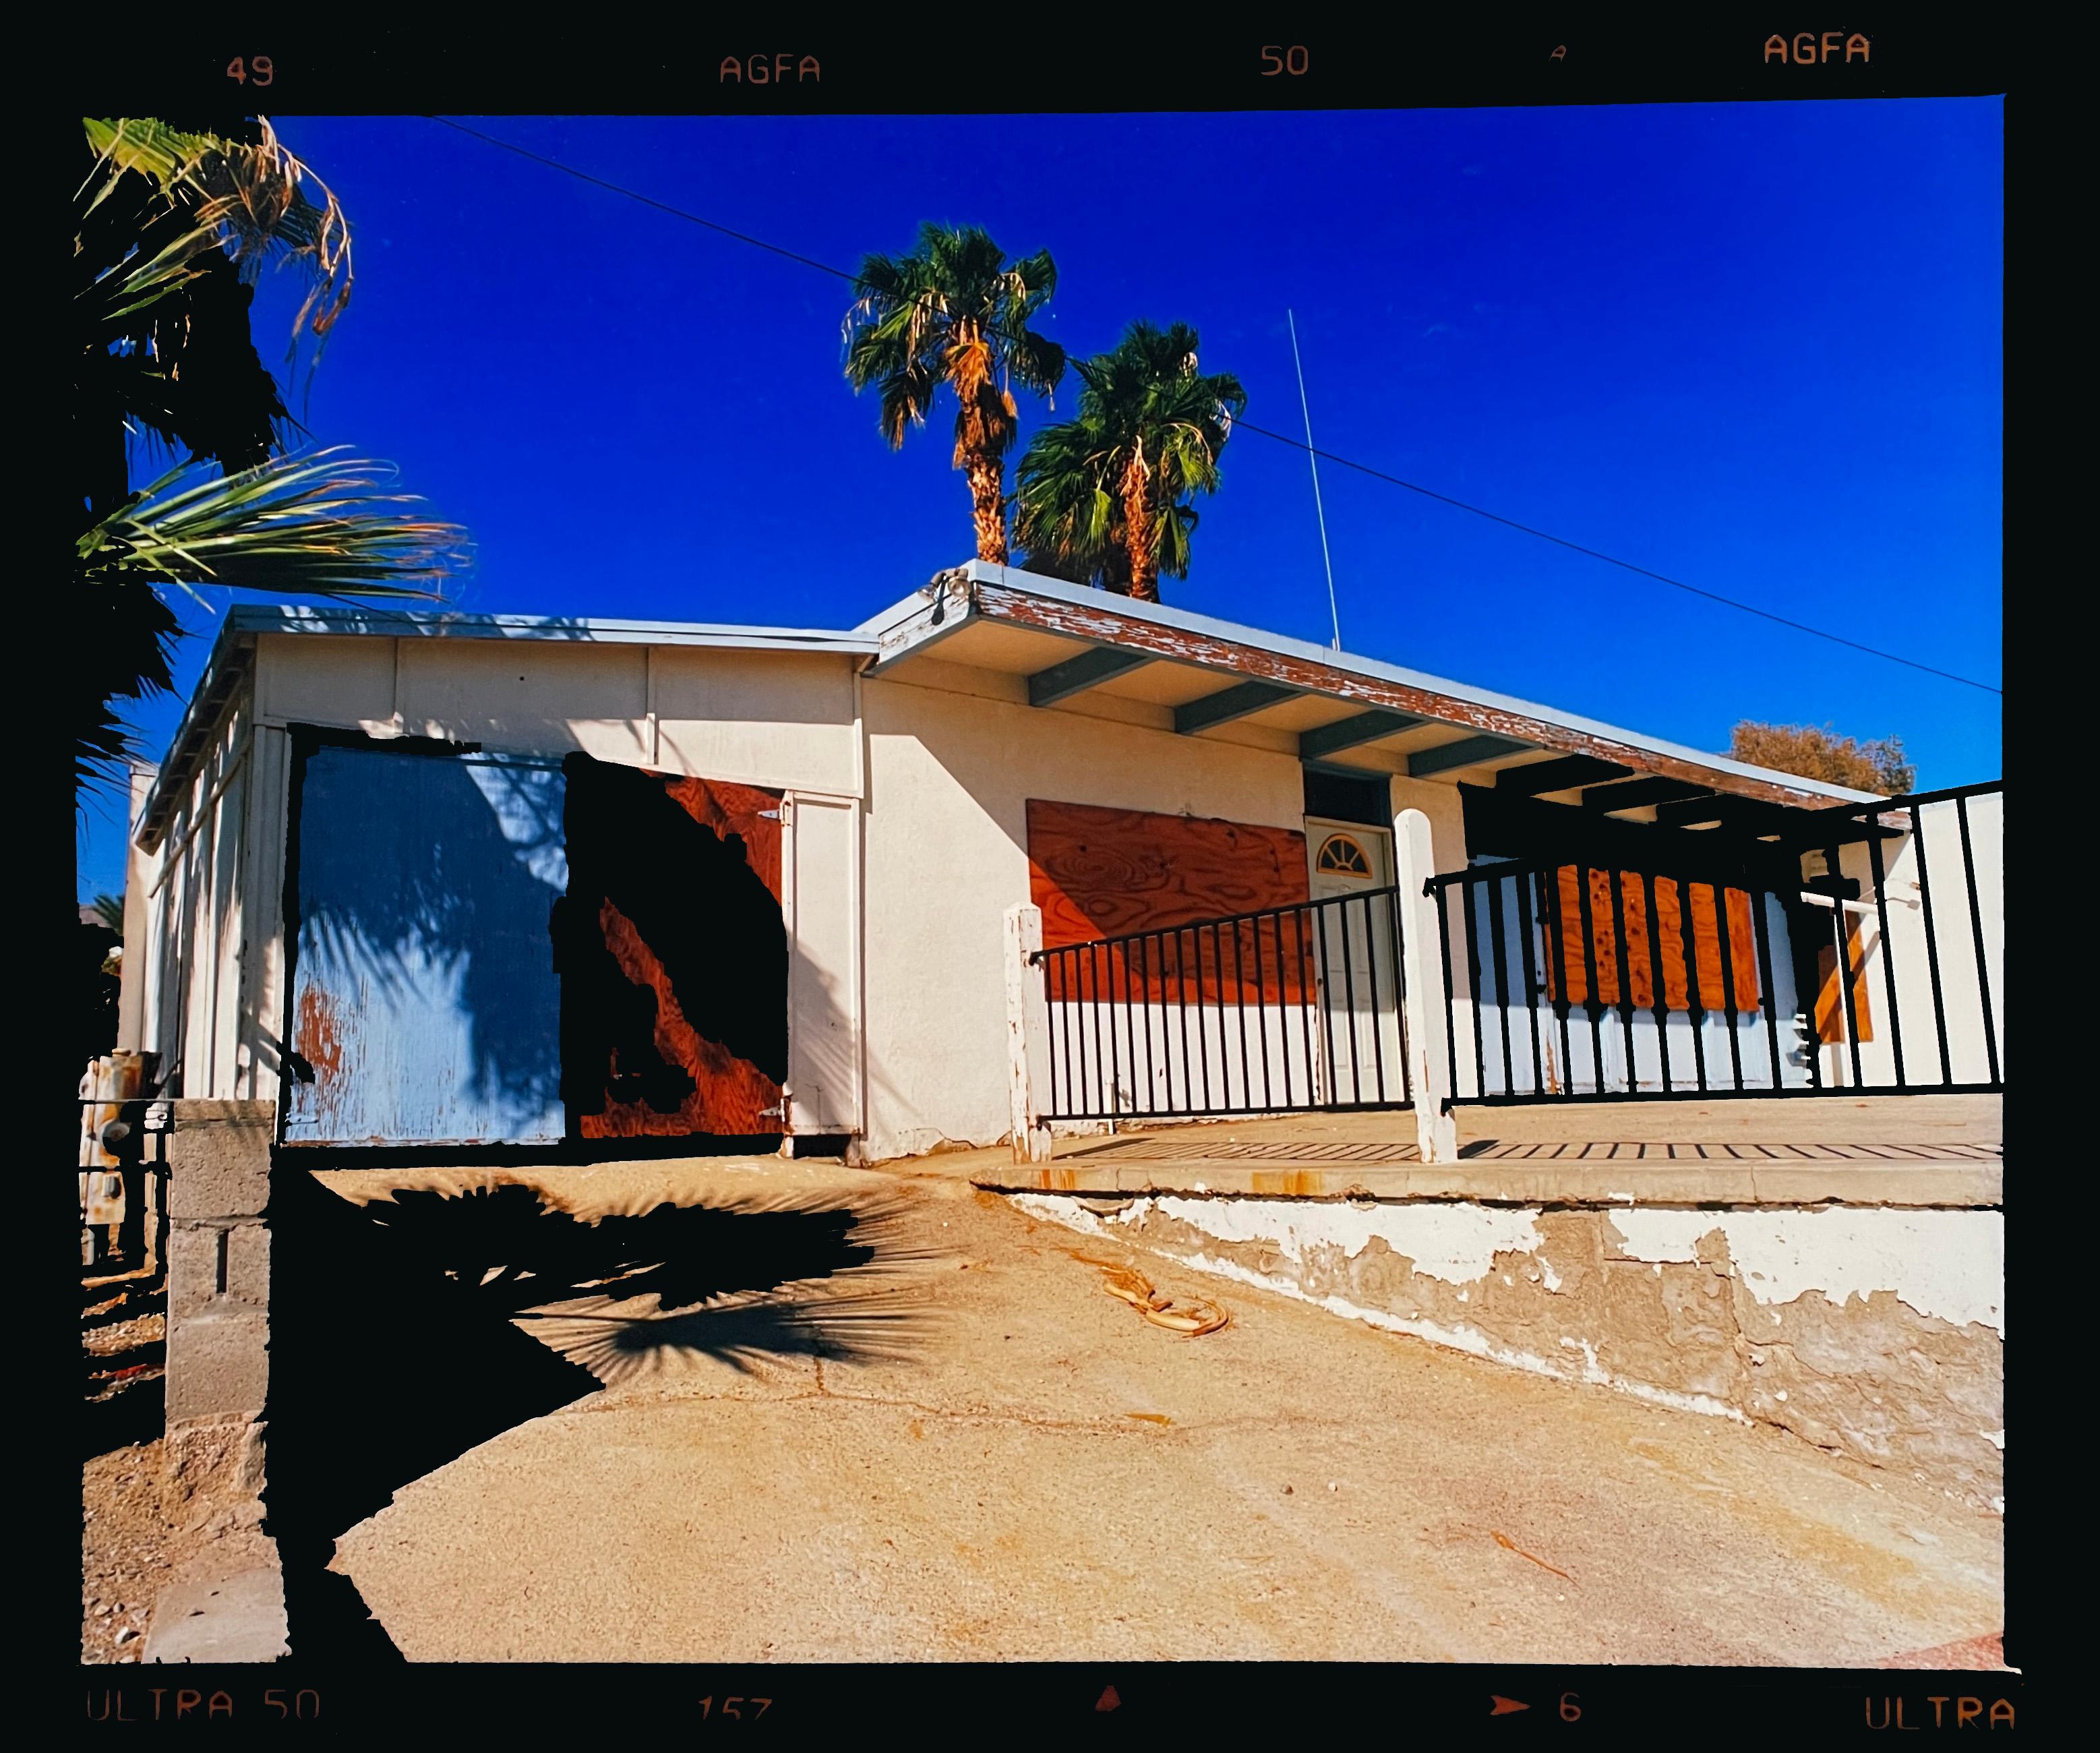 Richard Heeps Landscape Photograph - Motel Desert Shores III, Salton Sea, California - American Color Photography